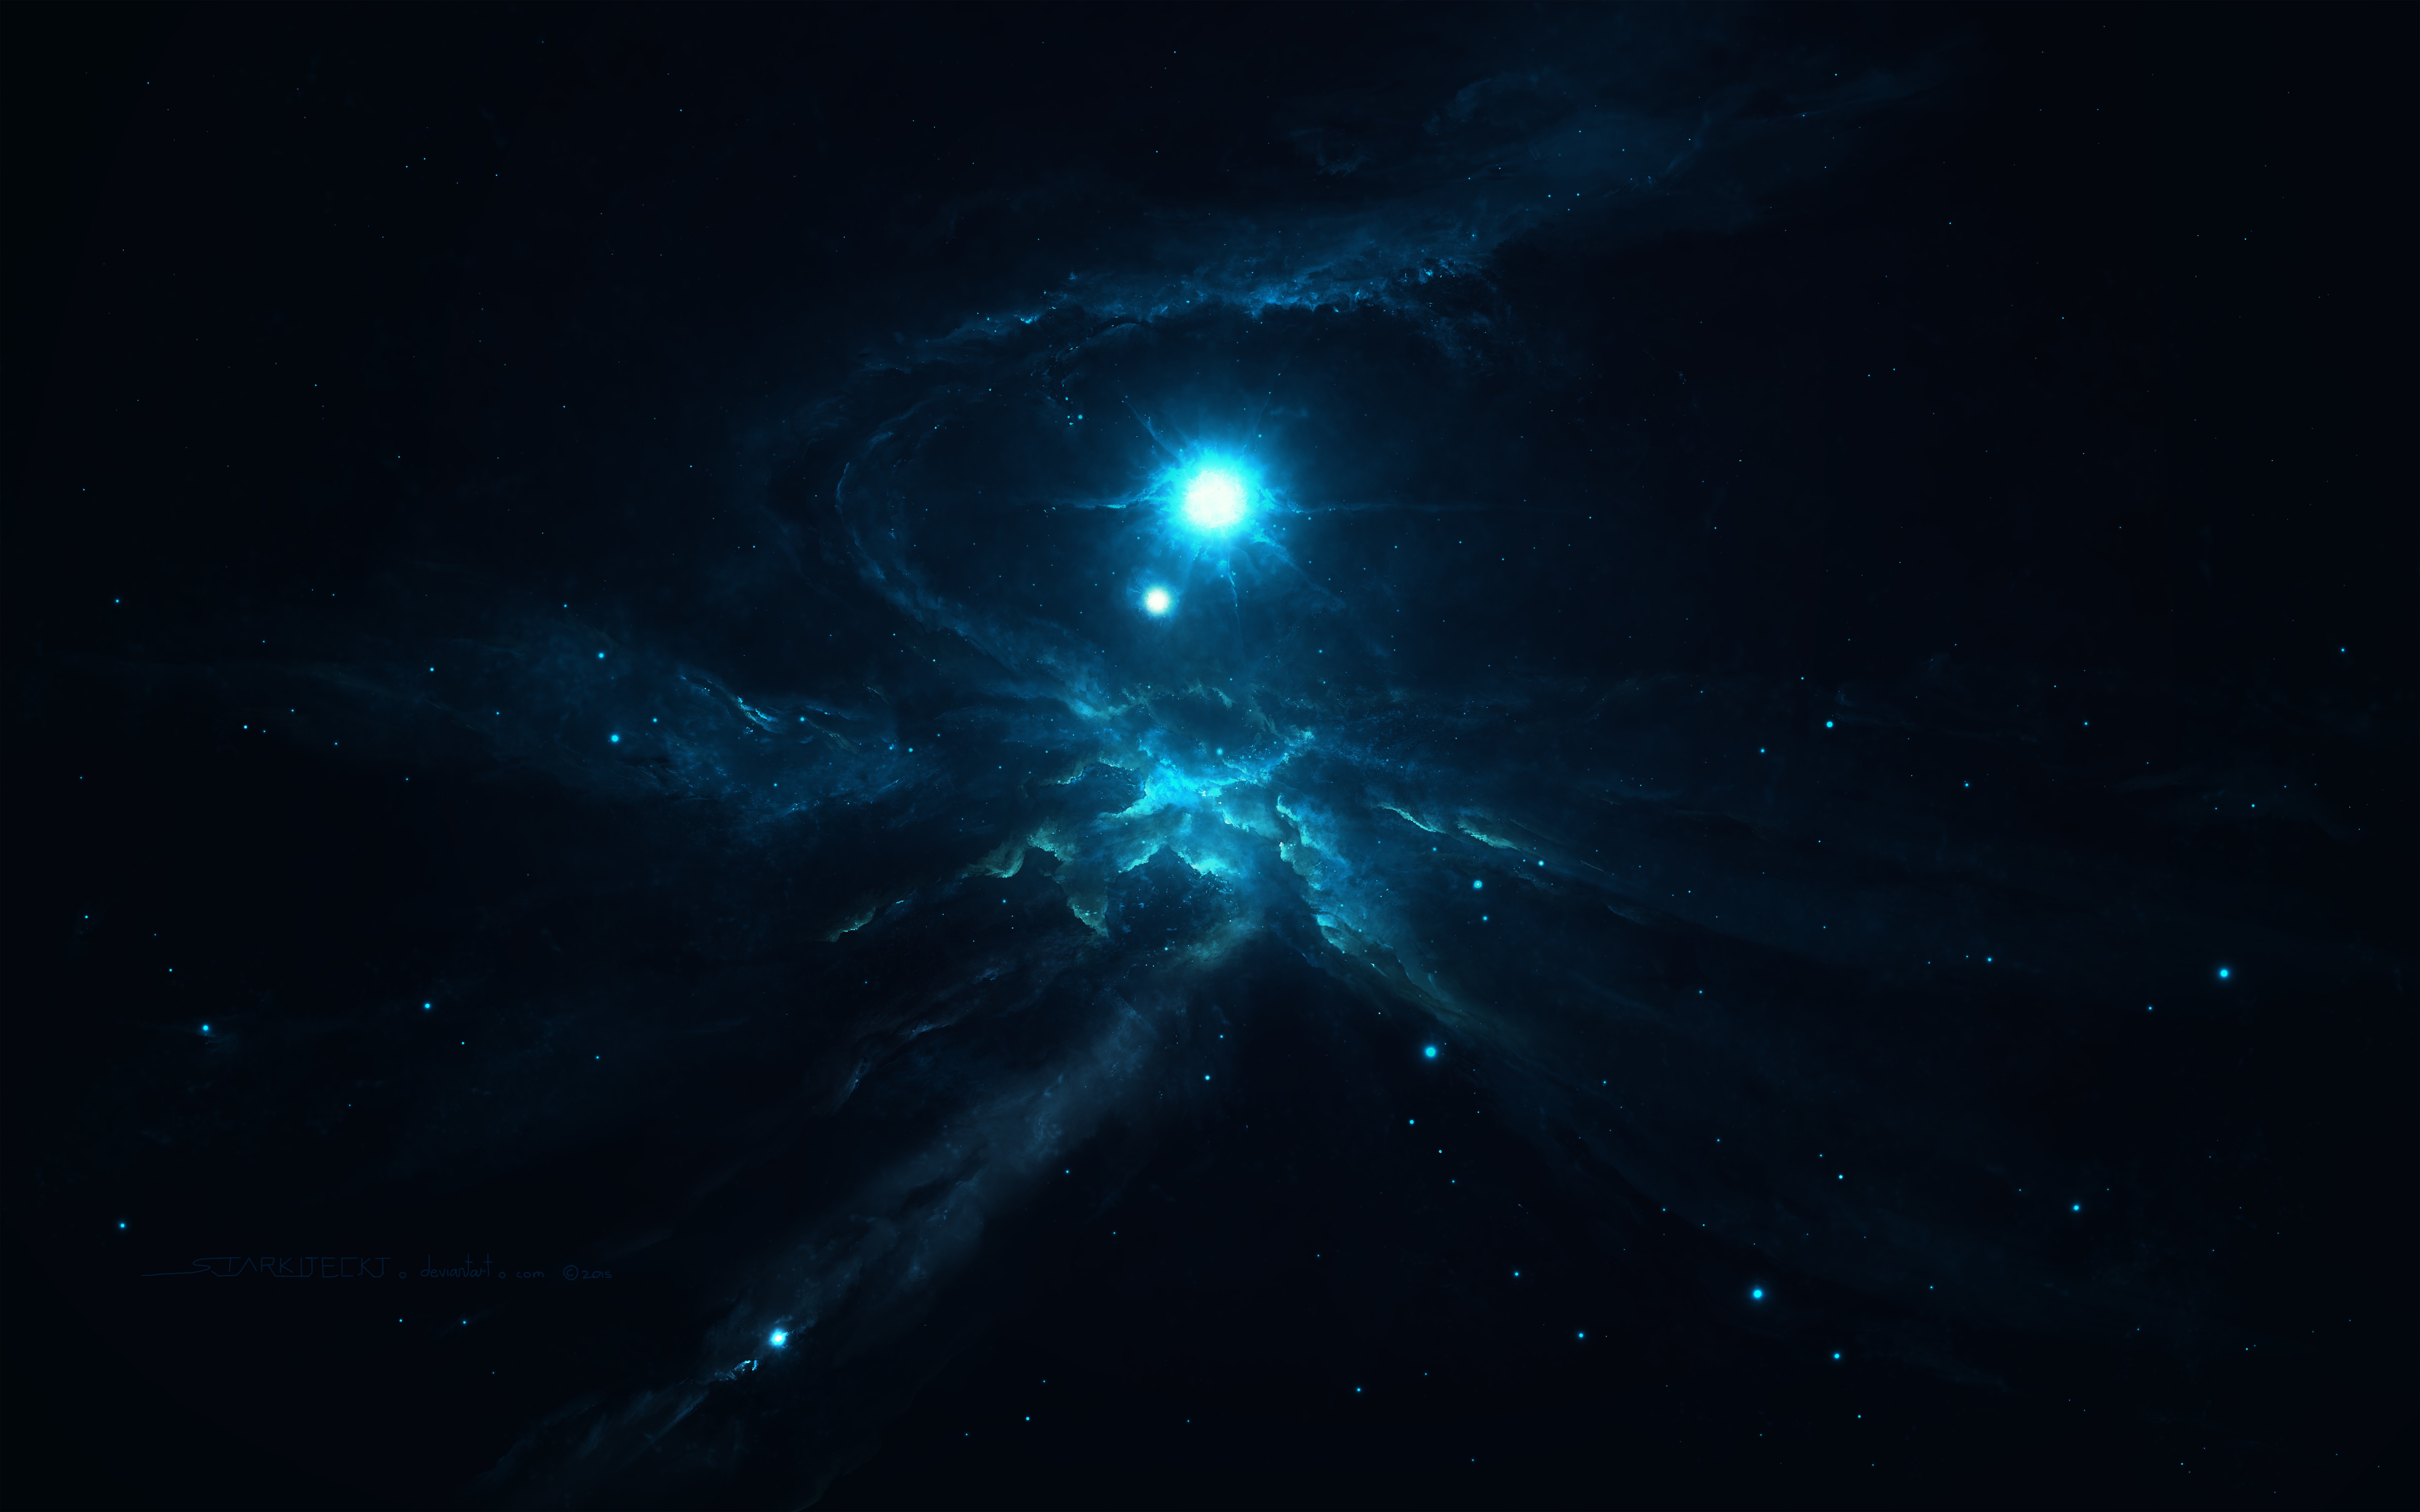 General 8000x5000 dark nebula abstract science fiction space galaxy universe stars space art Starkiteckt cyan DeviantArt